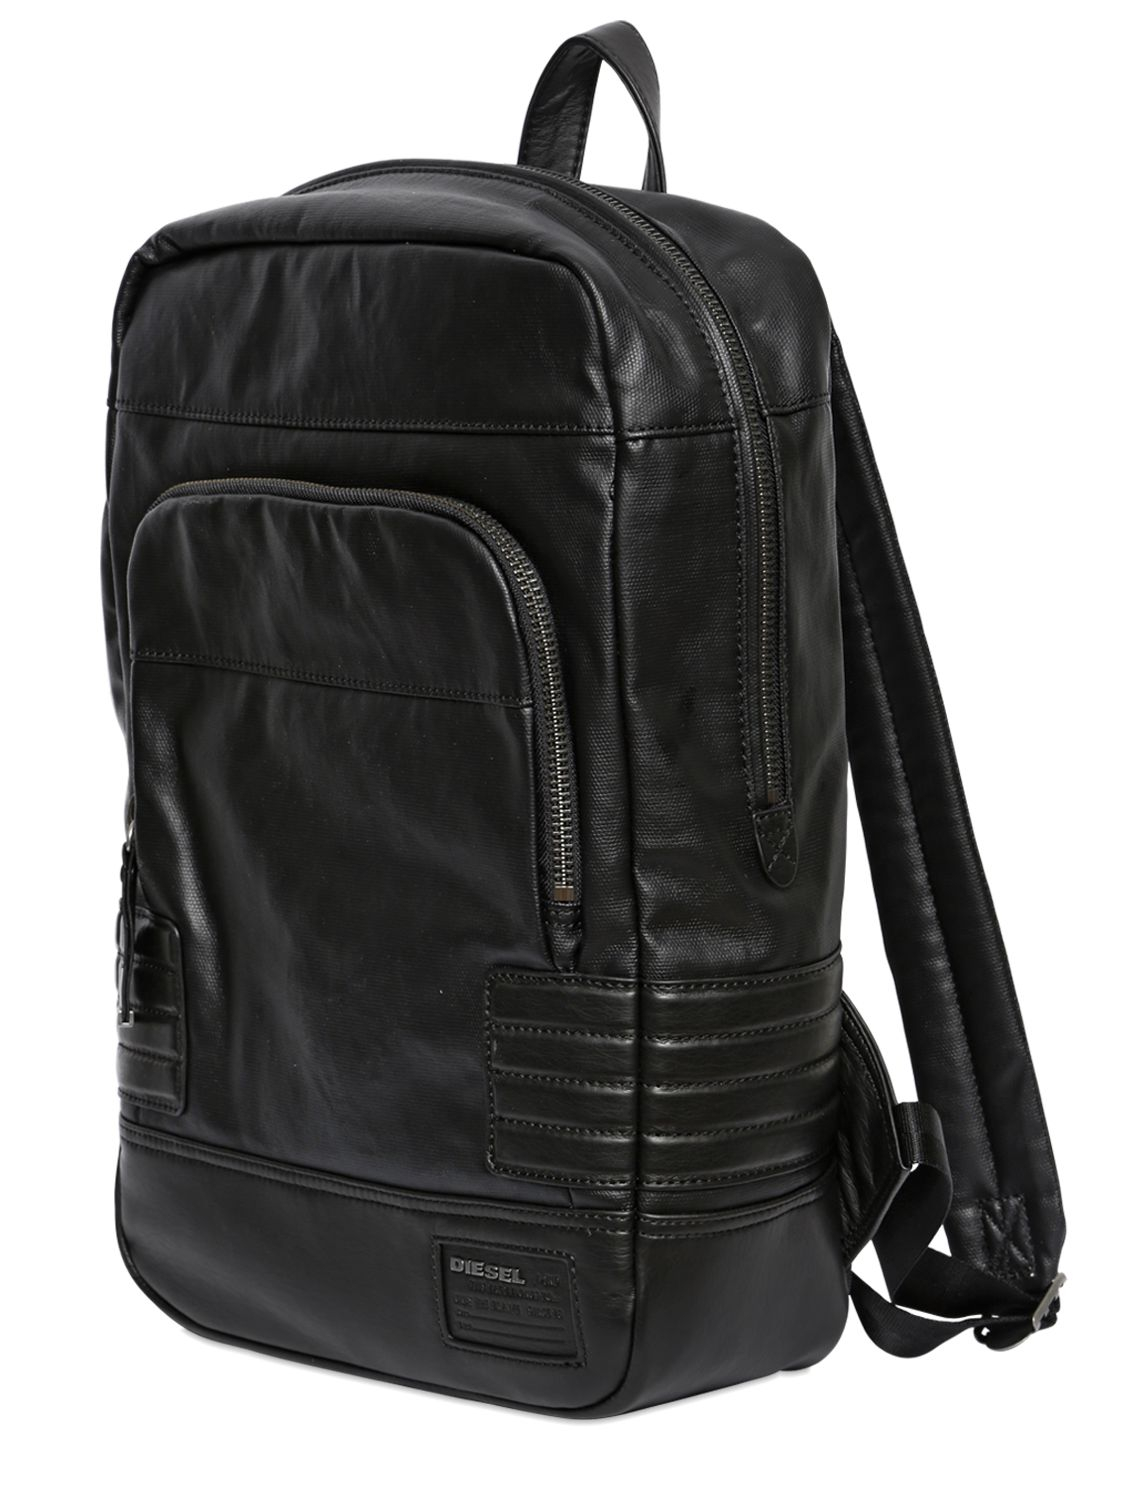 Lyst - Diesel Faux Leather Backpack in Black for Men